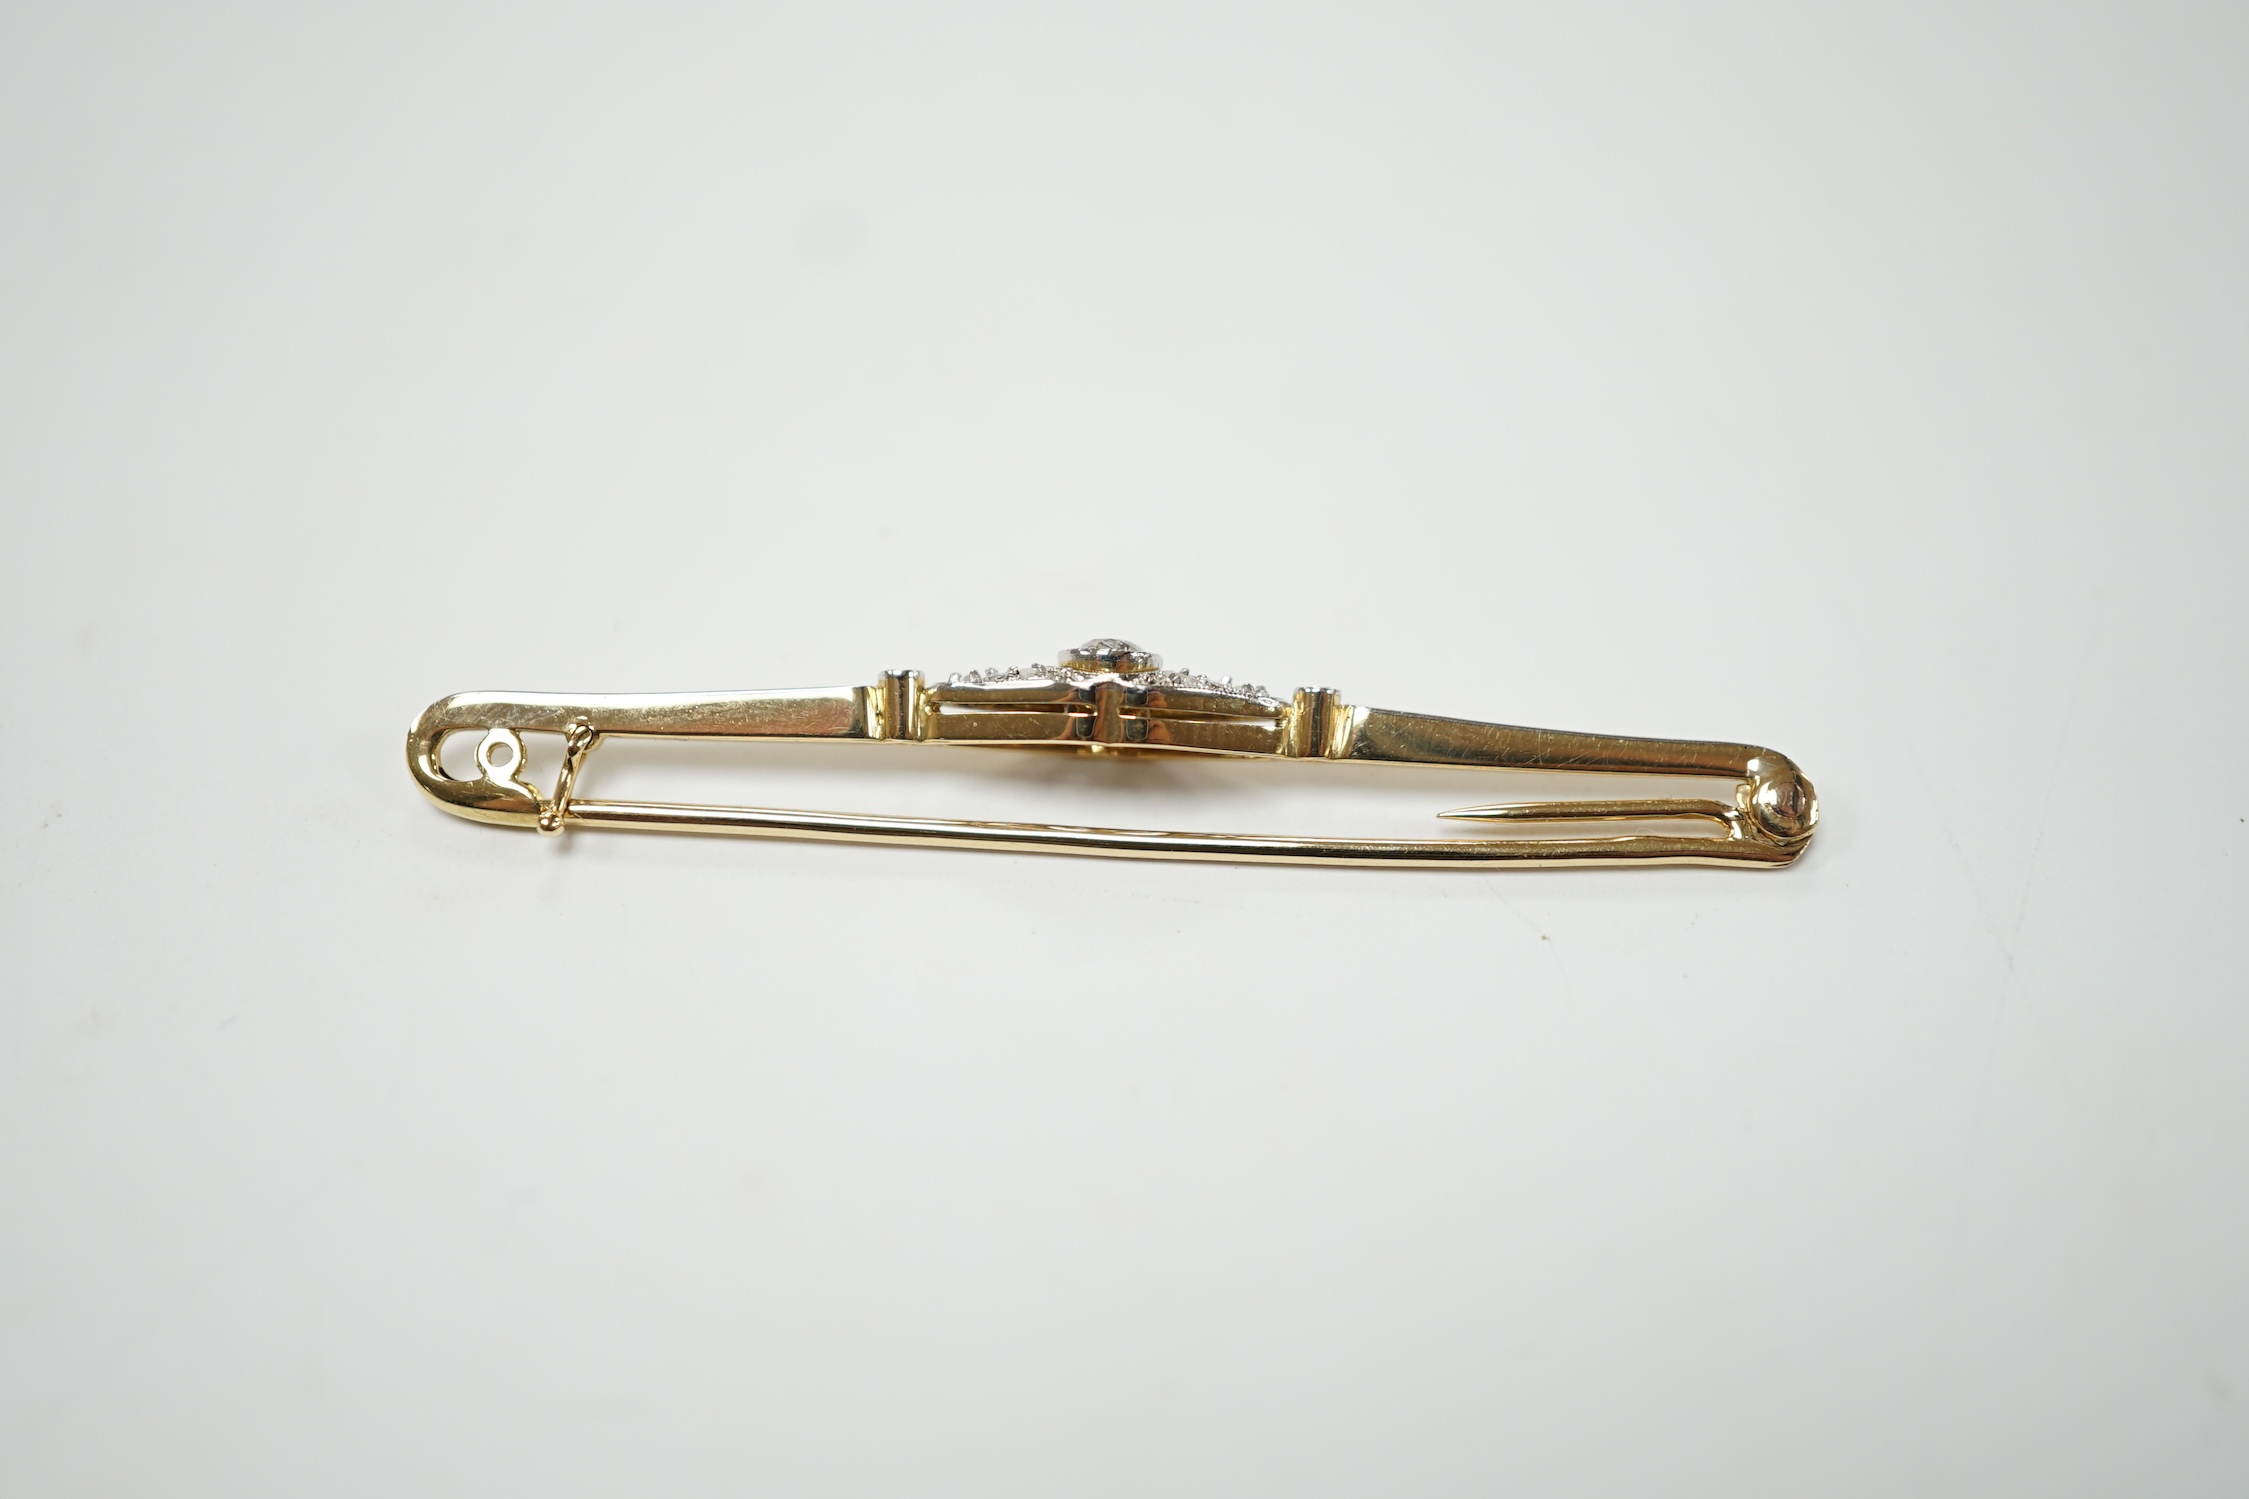 An Edwardian yellow metal and diamond cluster set bar brooch, 55mm, gross weight 3.6 grams. Good condition.